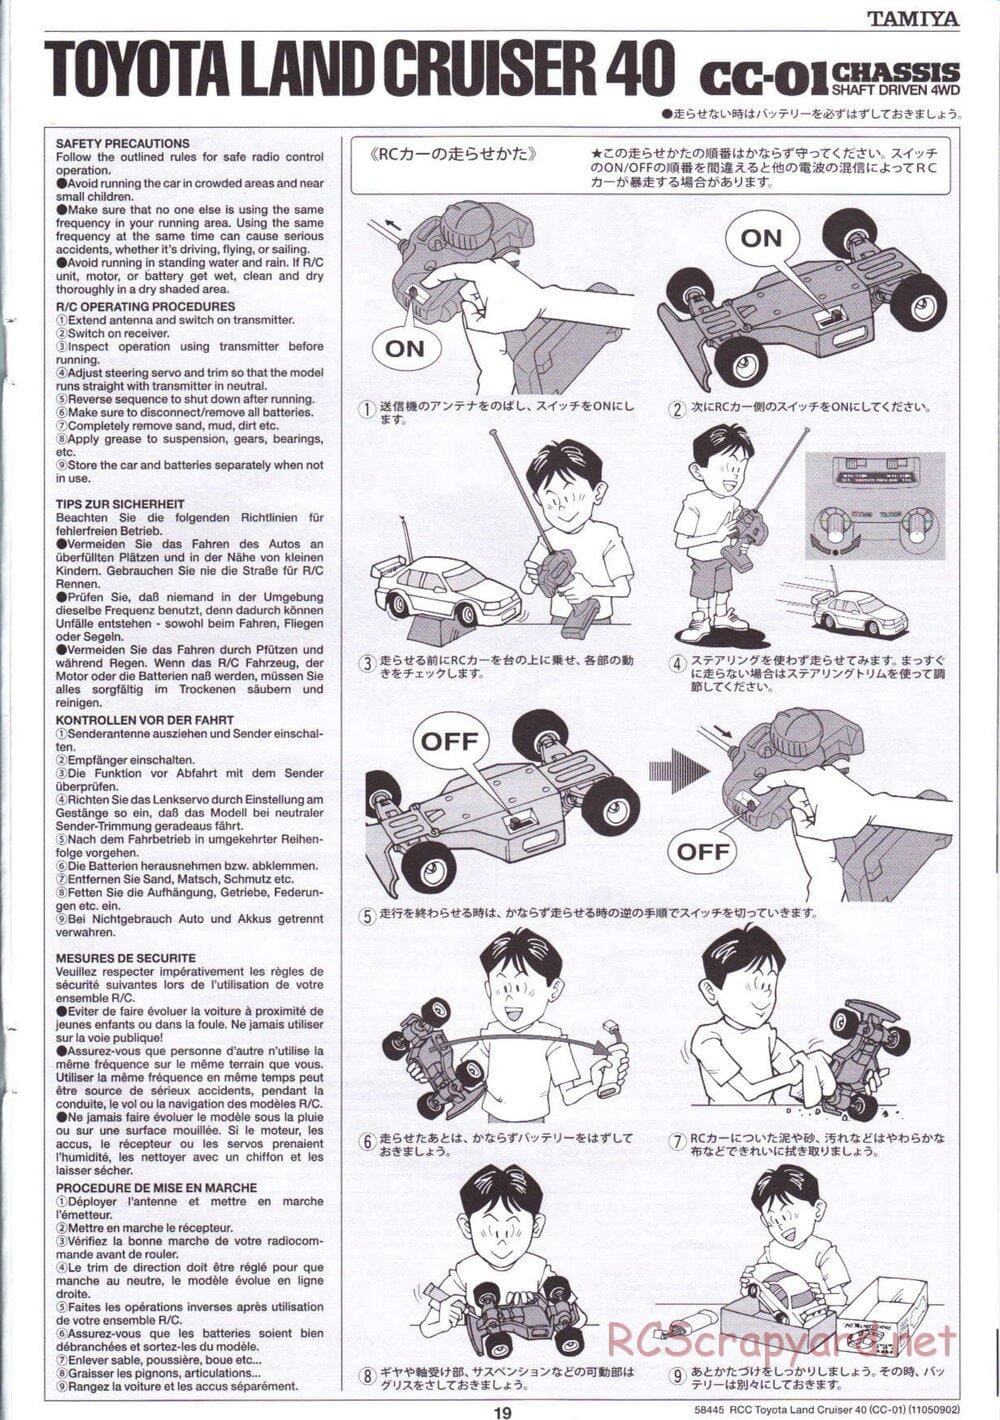 Tamiya - Toyota Land Cruiser 40 - CC-01 Chassis - Manual - Page 19